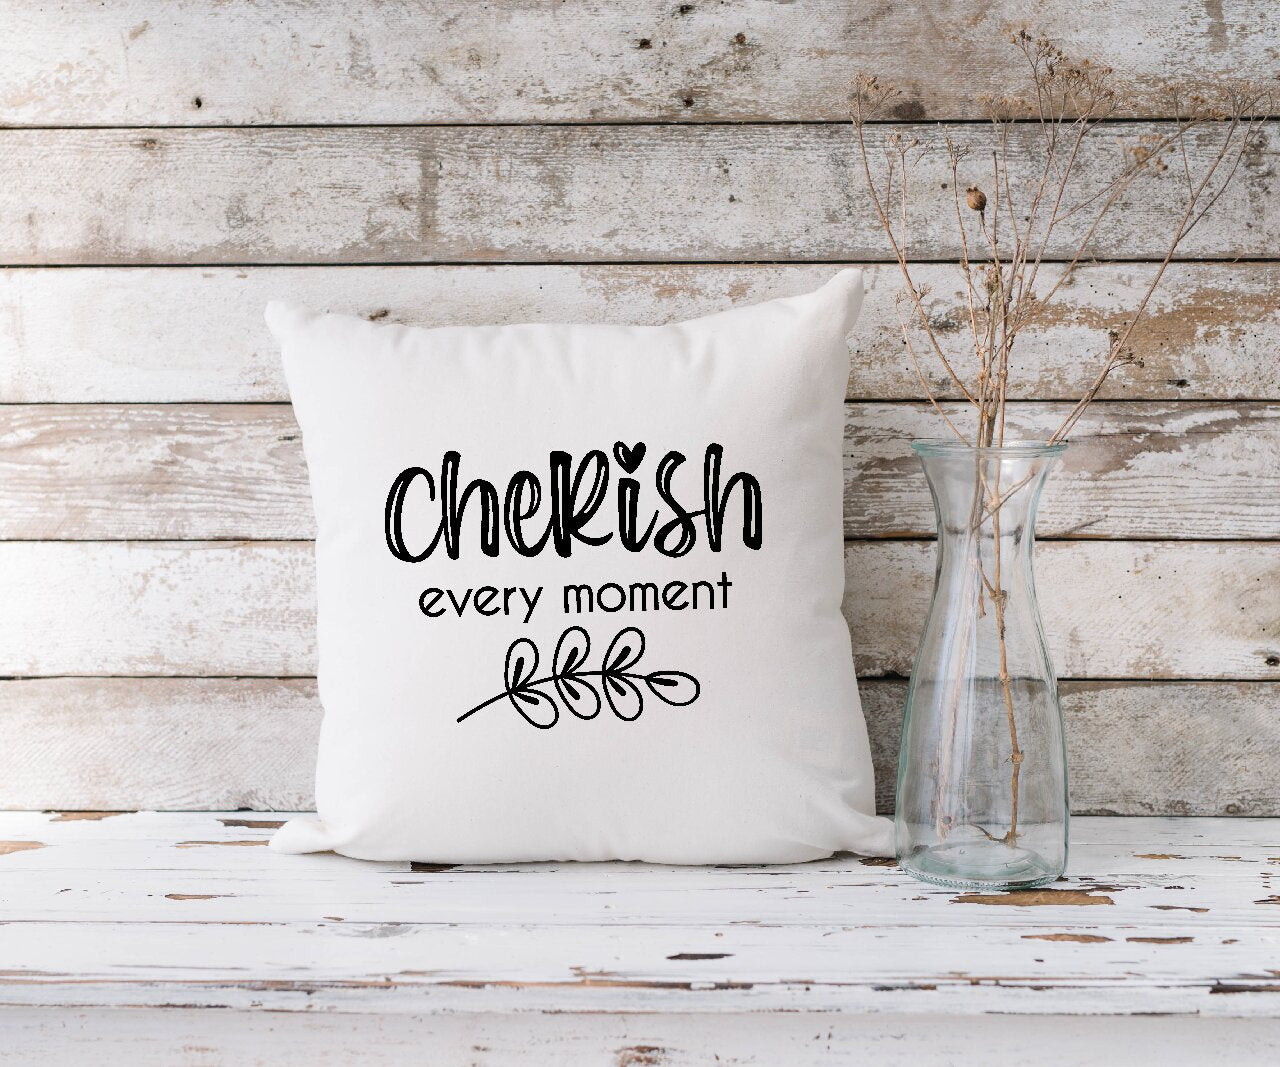 Cherish Every Moment - Cushion Cover